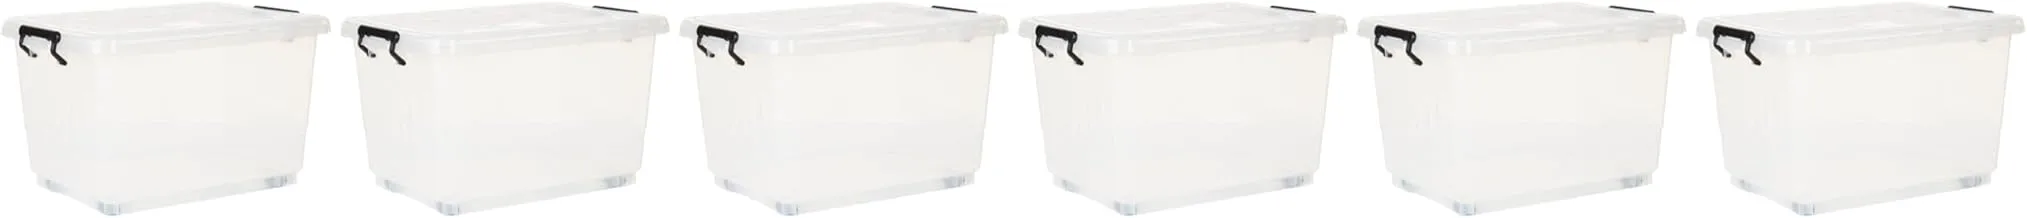 Cosmoplast 33L Clear Plastic Storage Box with Wheels & Lockable Lid Set of 6